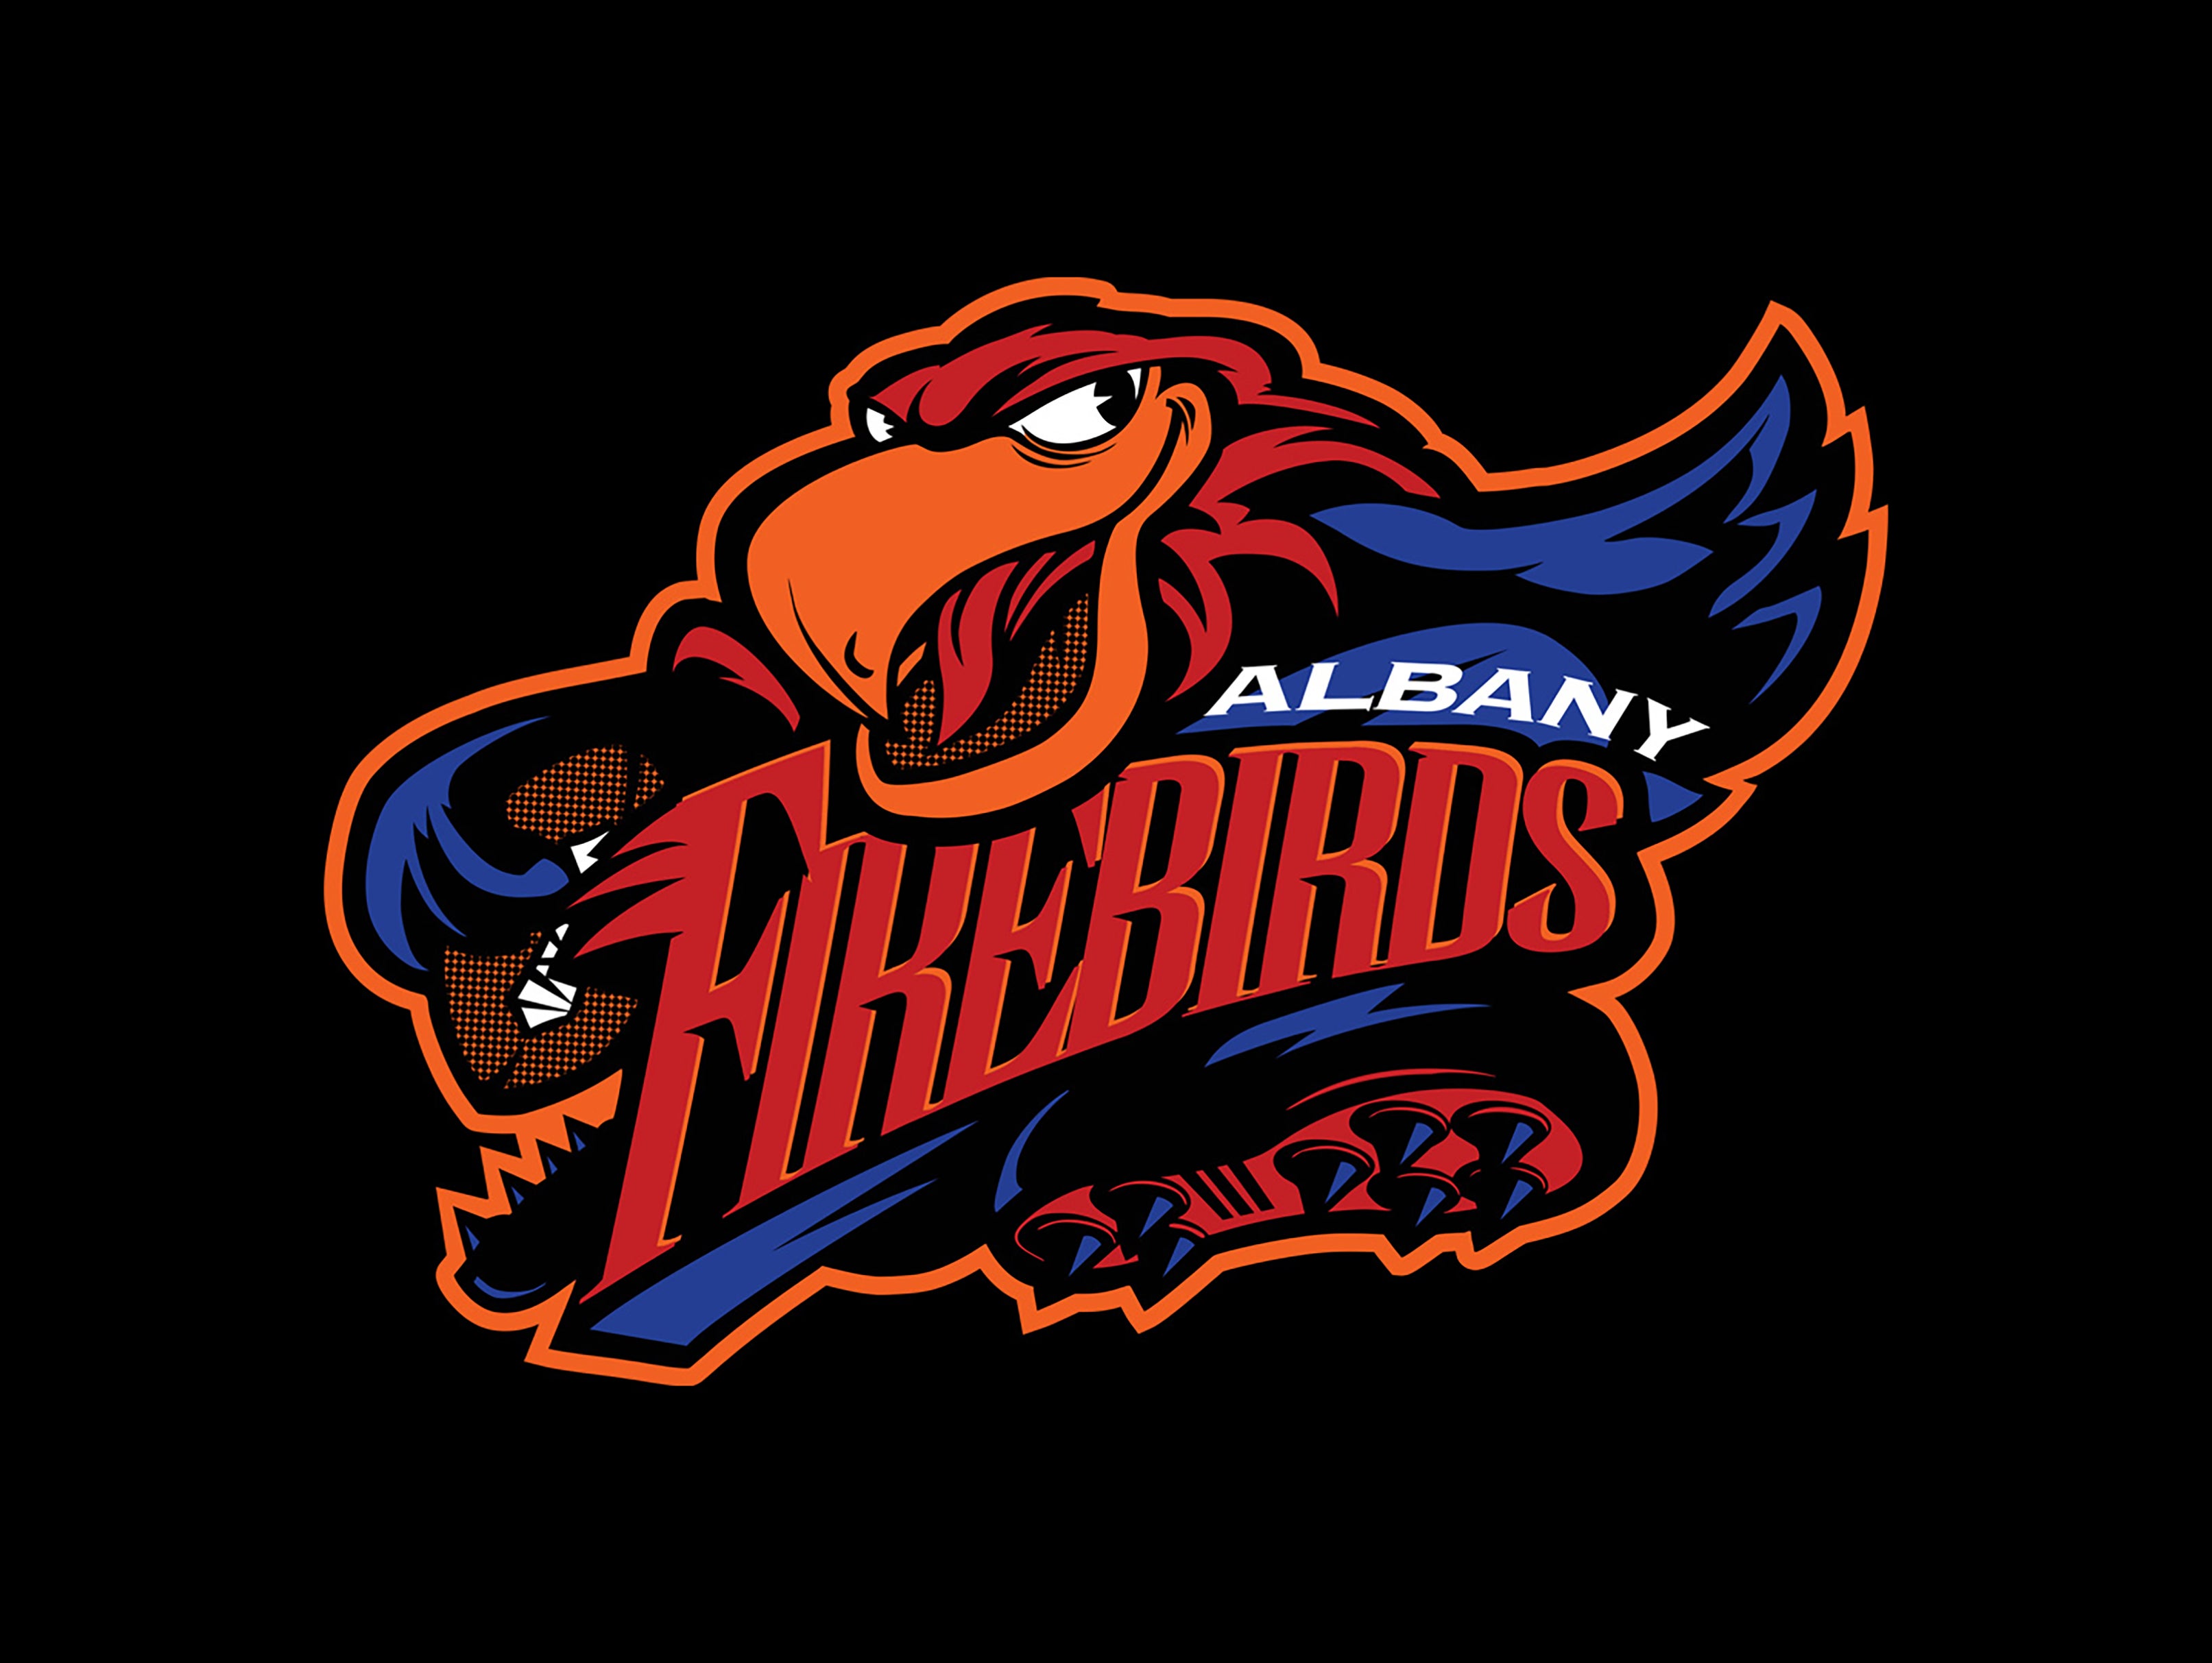 Albany Firebirds vs. West Texas Desert Hawks